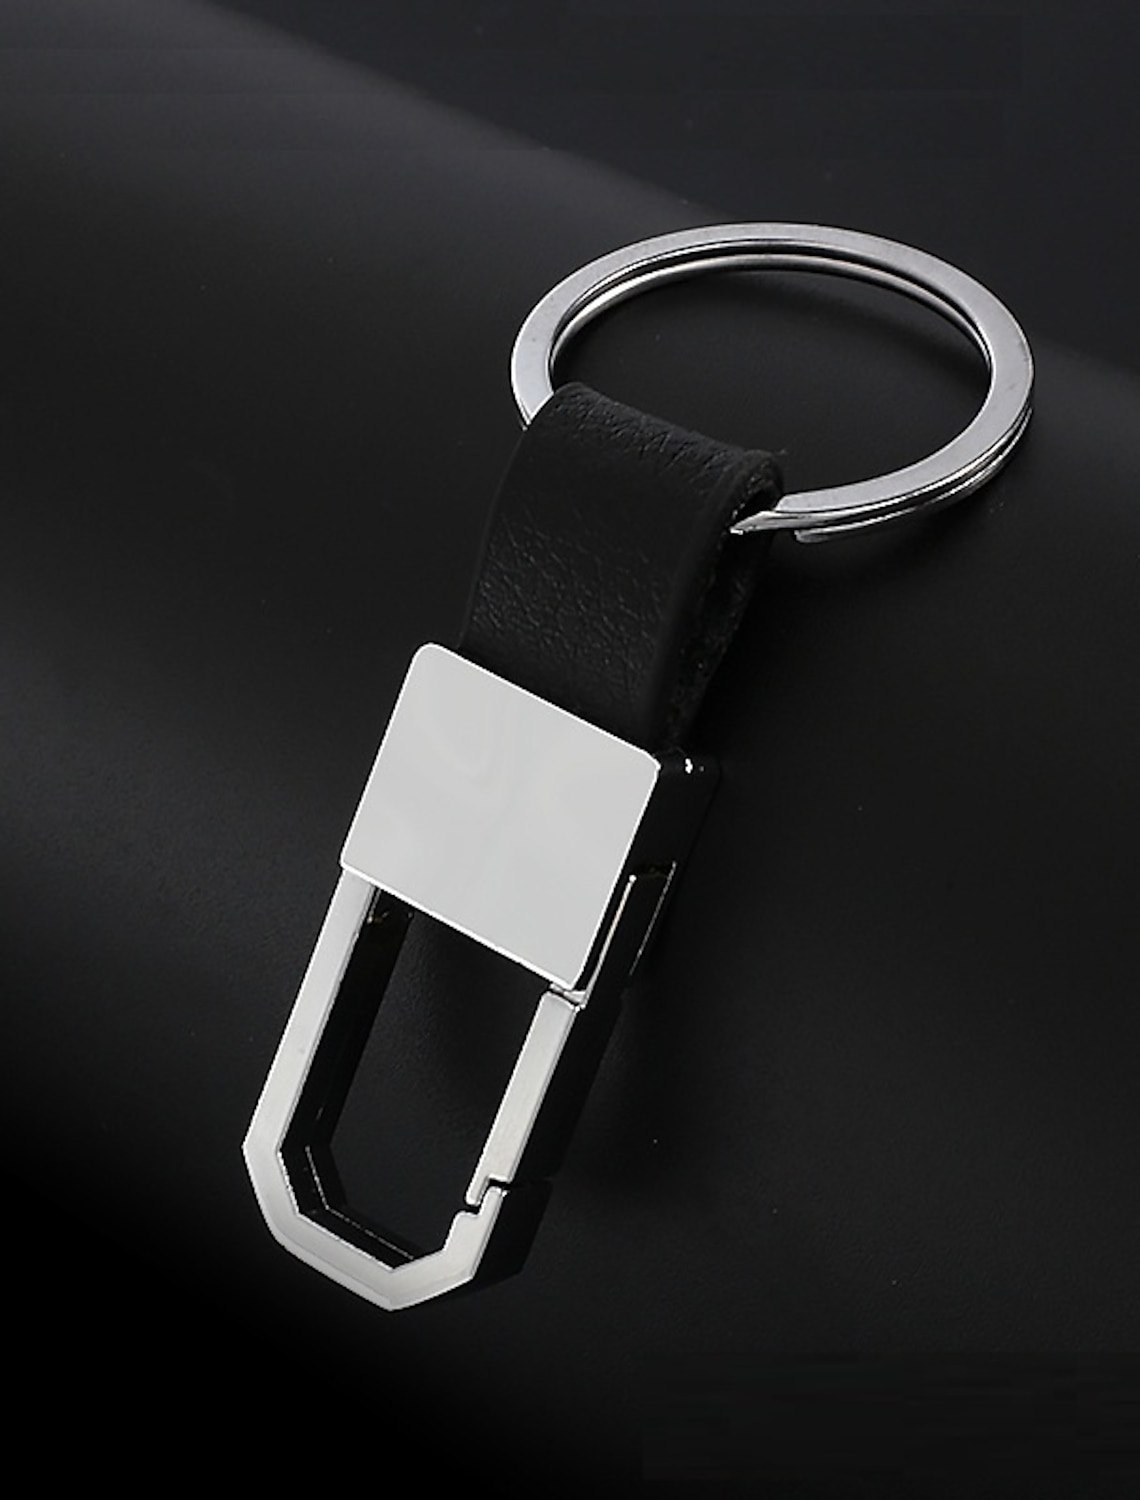 For VW Alloy Black Leather Keychain Ring LED Flashlight Opener Home Car Gift 